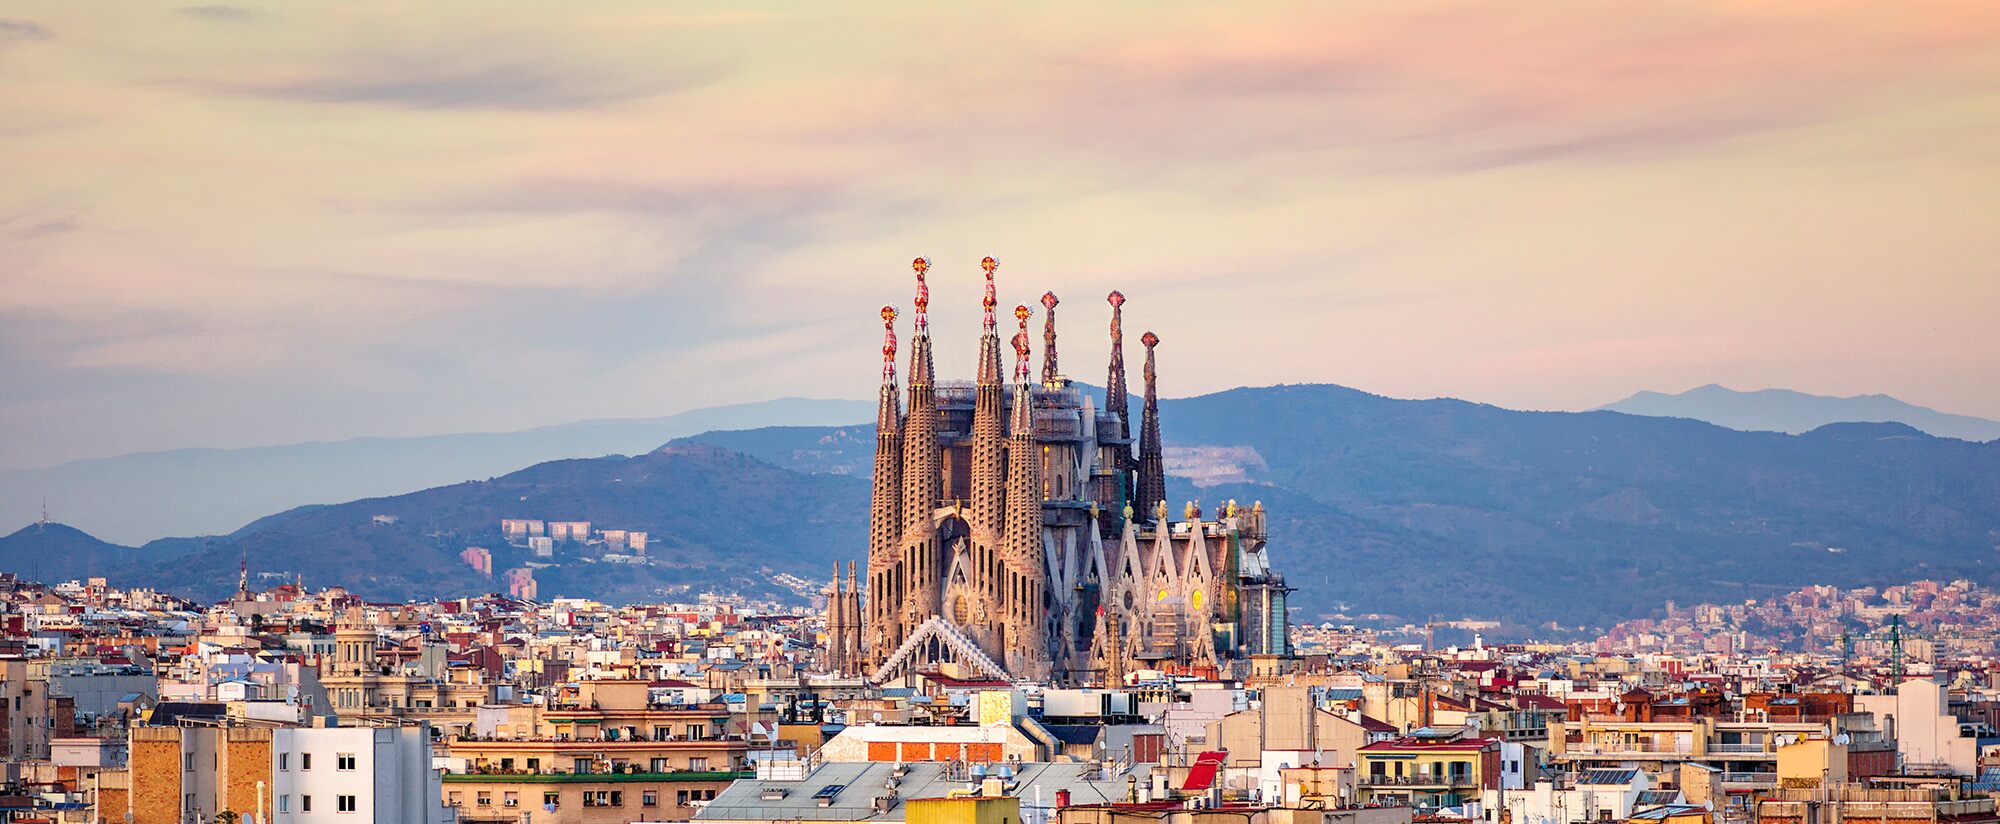 The Sagrada Familia, an architectural and spiritual tour de force